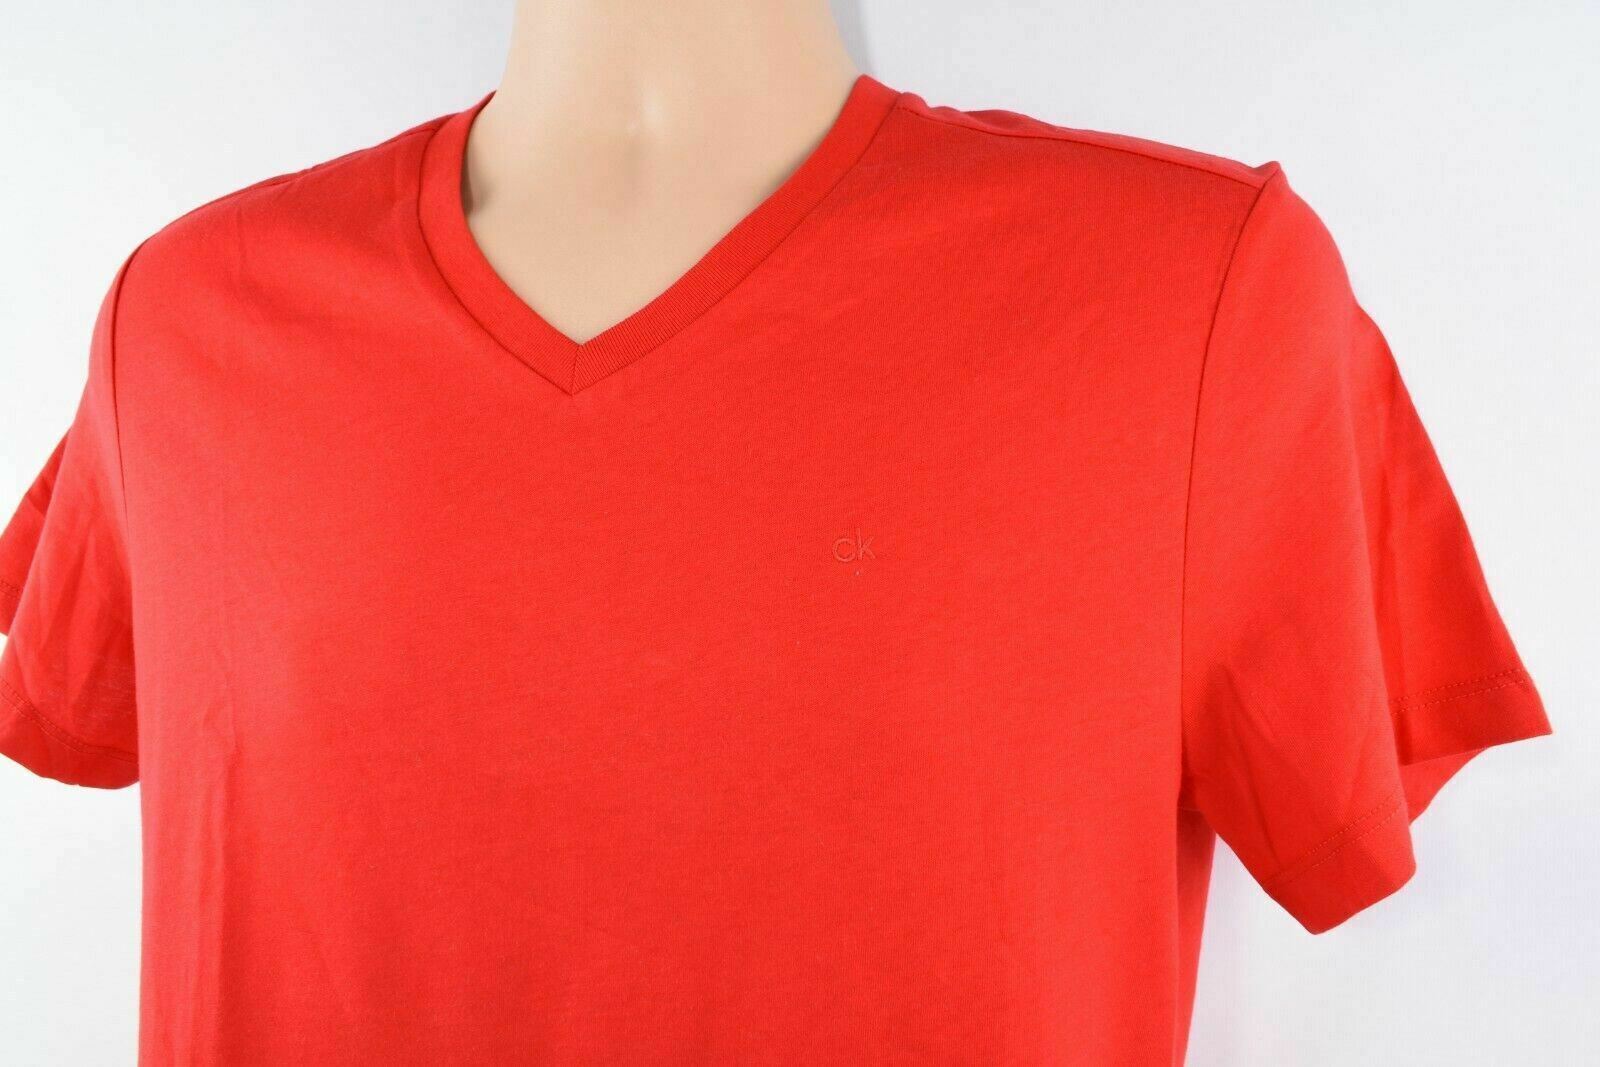 CALVIN KLEIN Men's V-neck T-shirt, Liquid Touch Cotton, Slim Fit, Red, size S